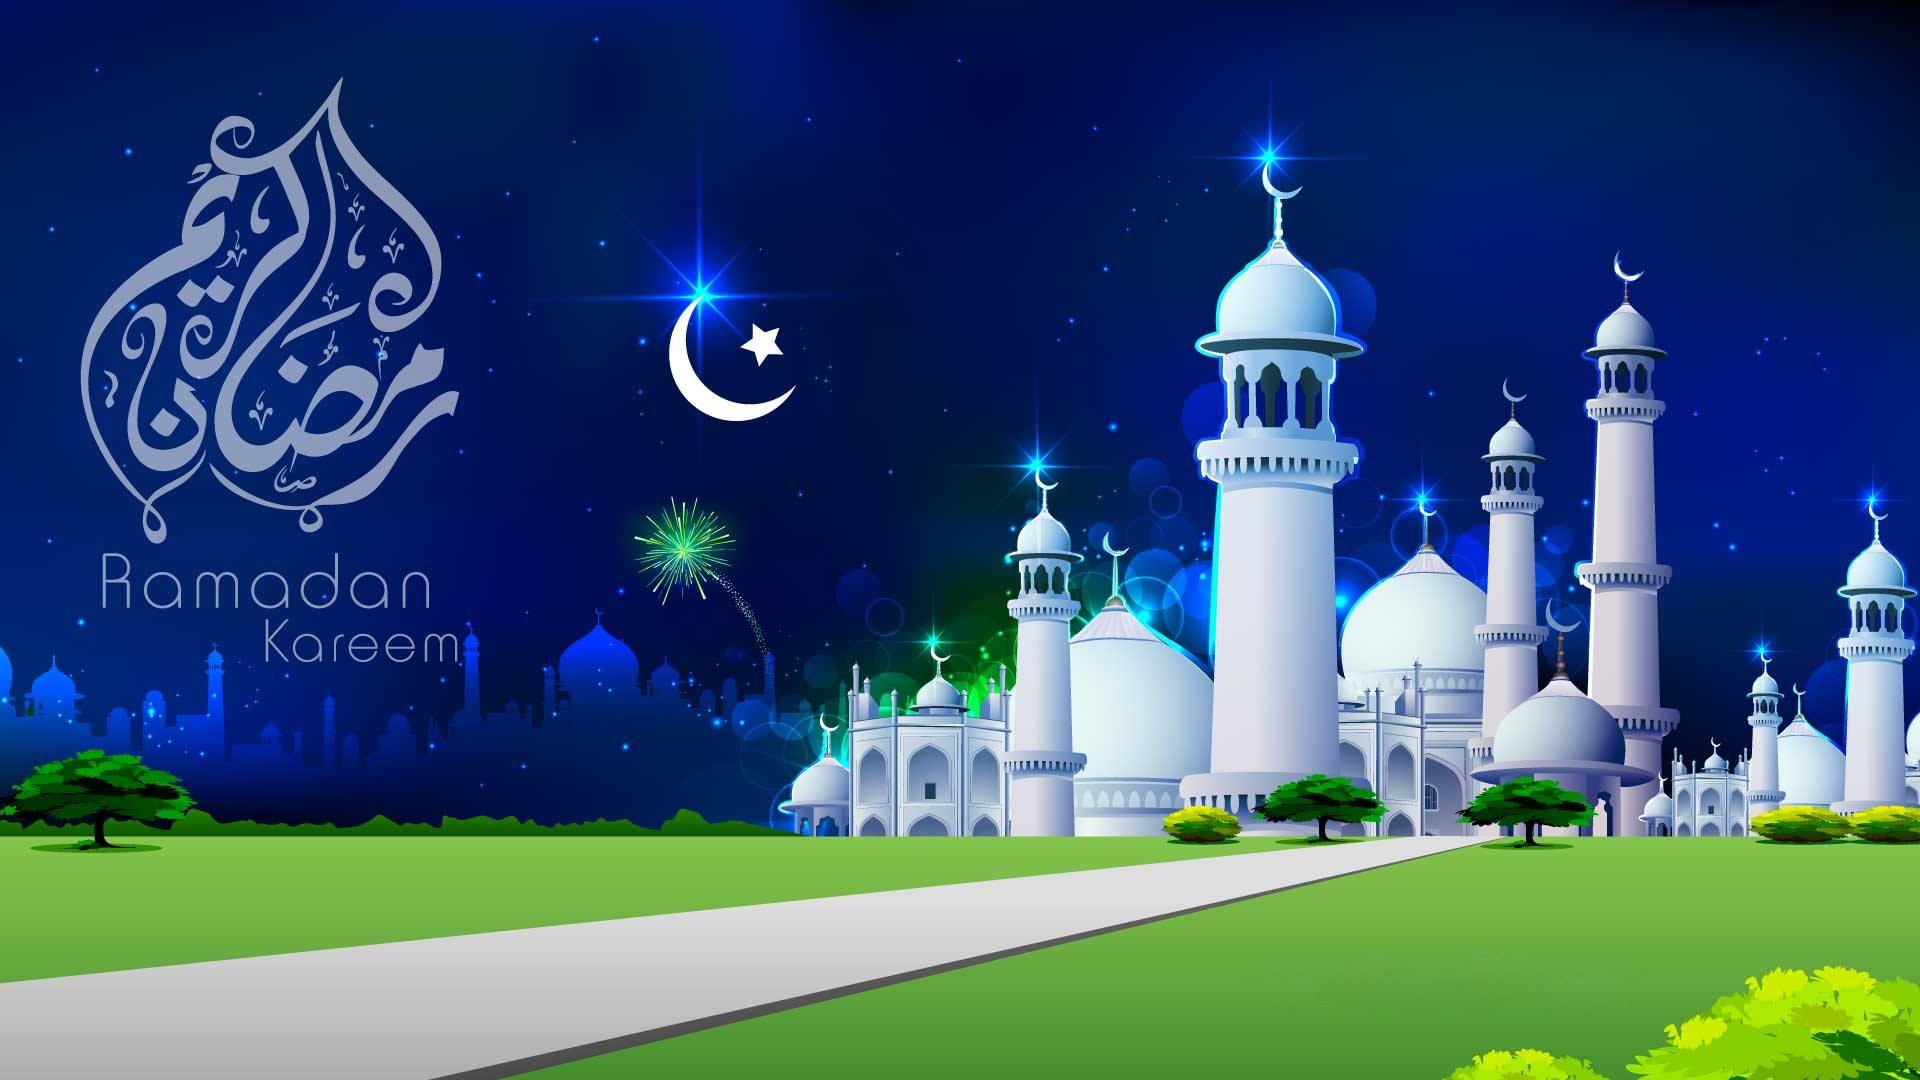 Best Ramadan Kareem Wishes 2022 In English, Arabic, Urdu With Images